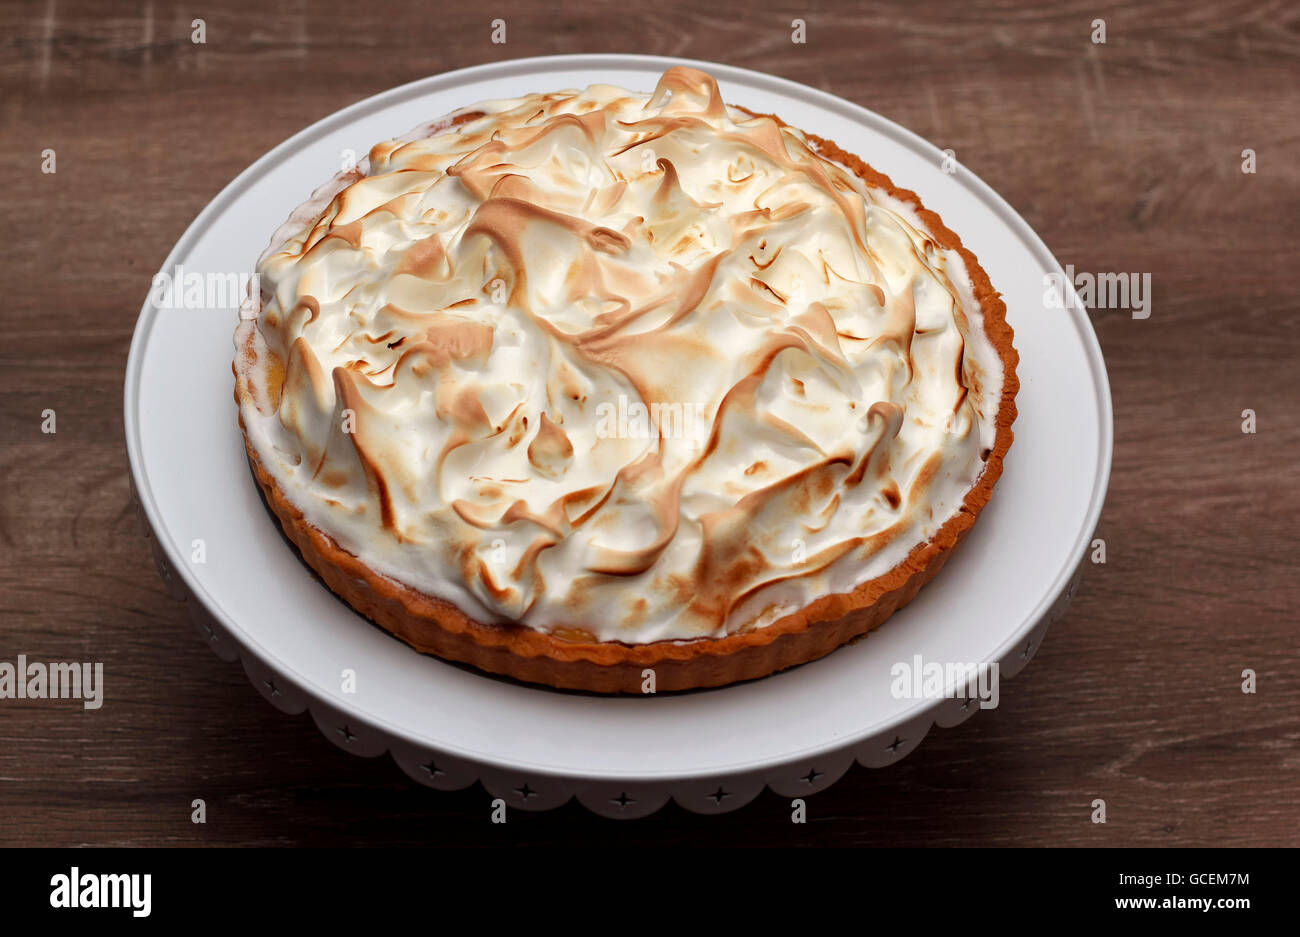 Lemon meringue pie close up Stock Photo